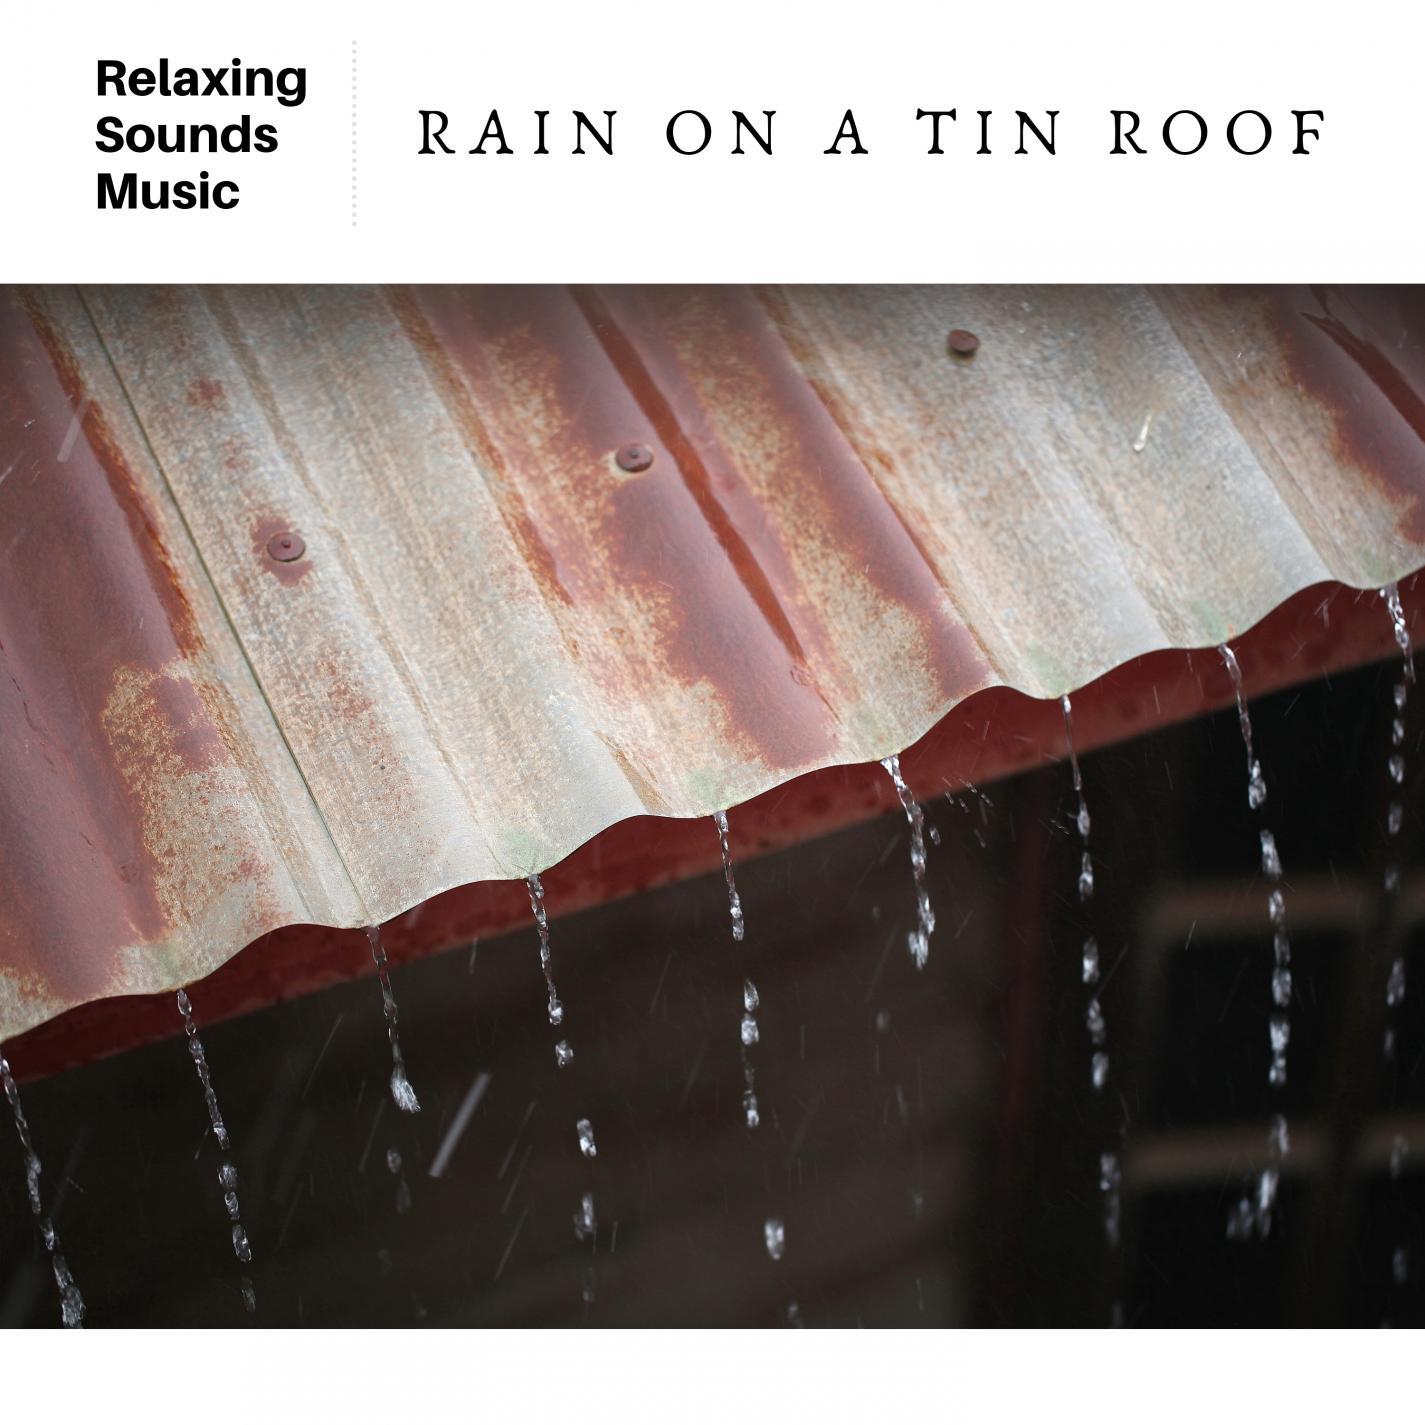 Rain Falling on a Tin Roof